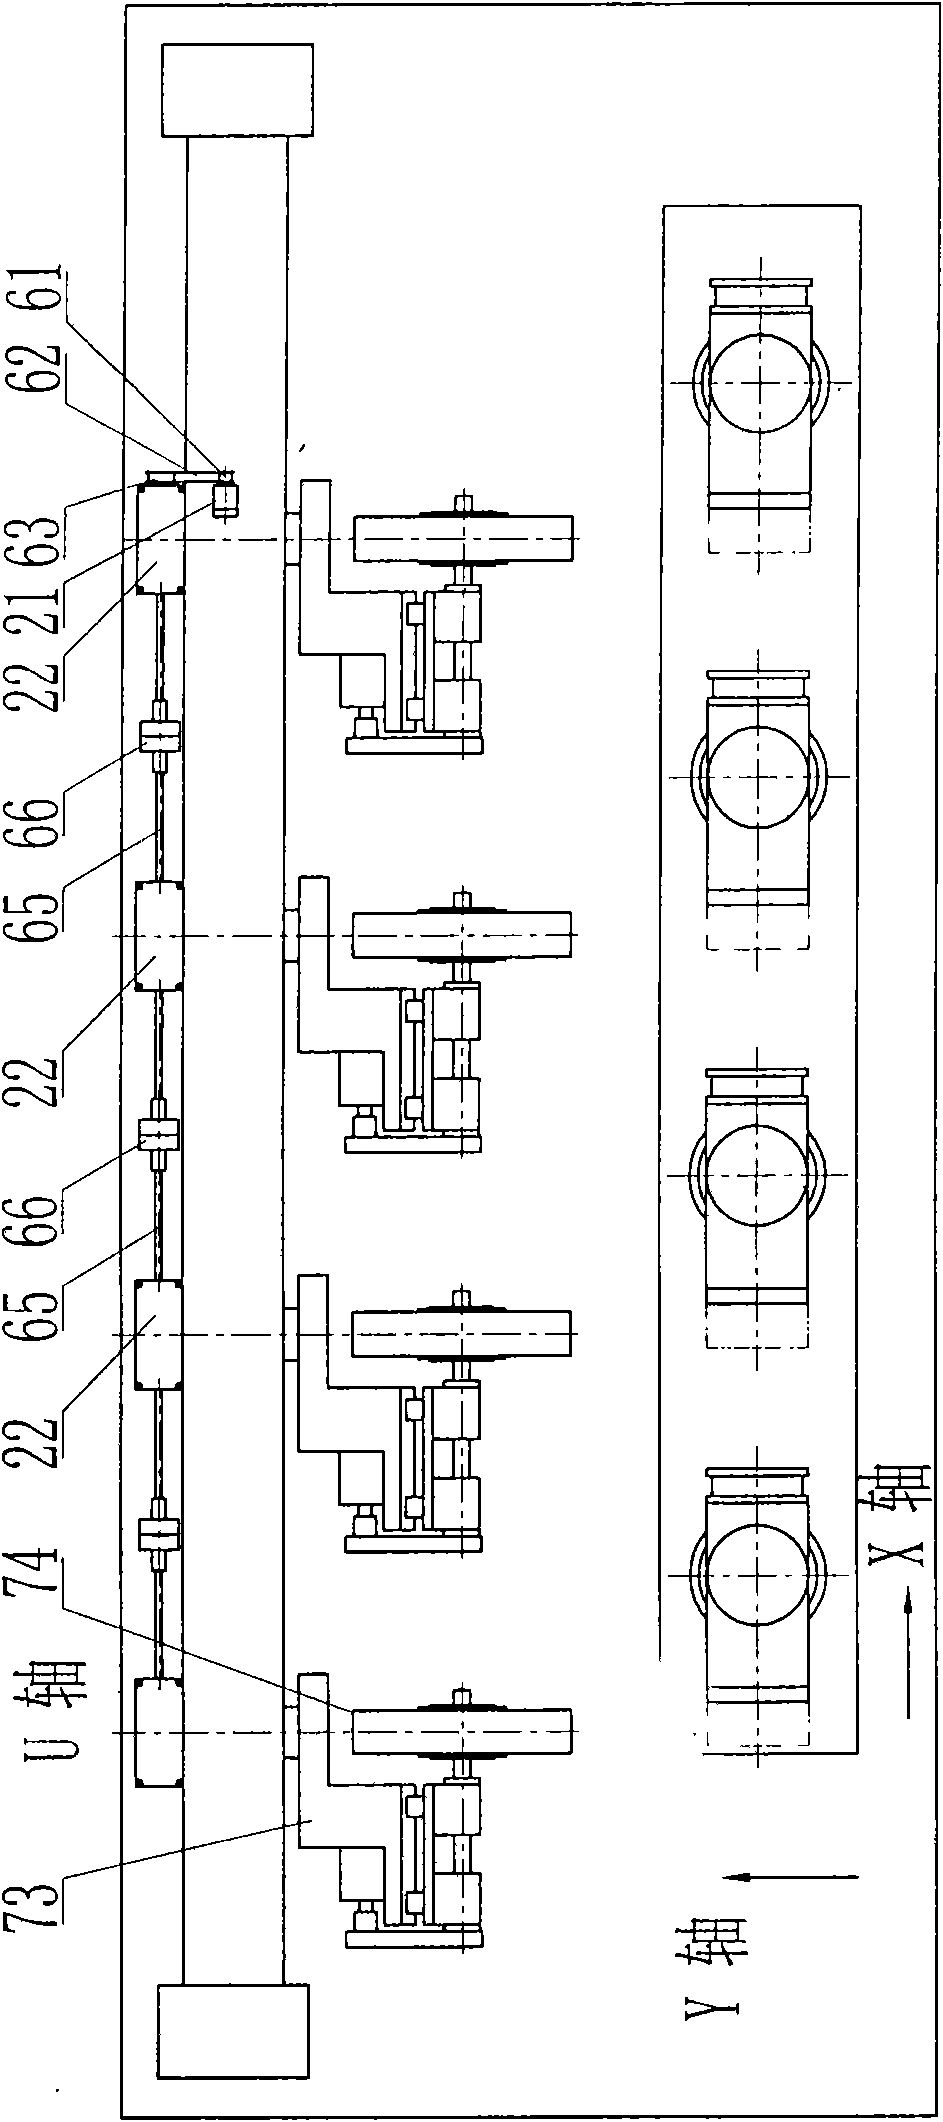 Six-axis linked numerical control polishing machine